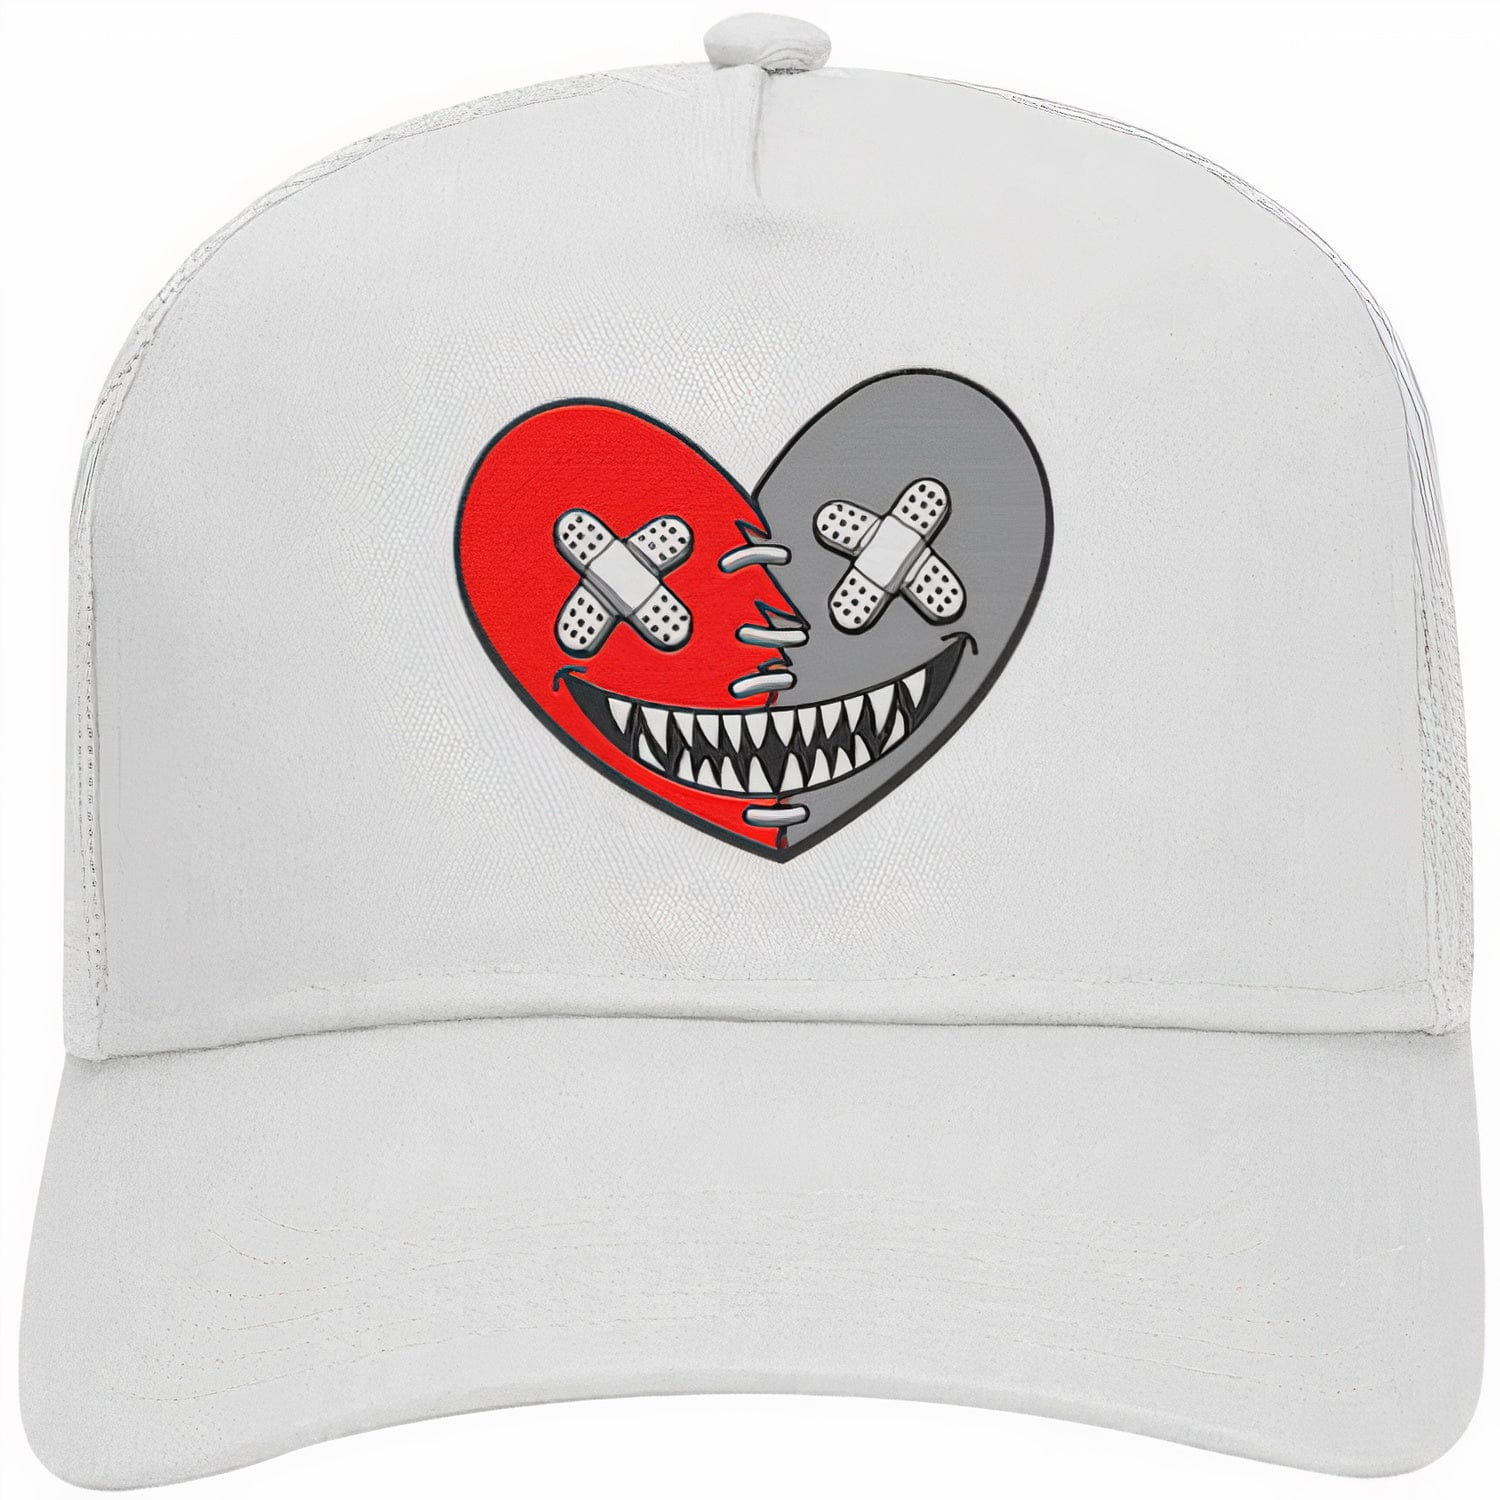 Reverse Oreo 6s Trucker Hats - Jordan 6 Reverse Oreo 6s - Heart